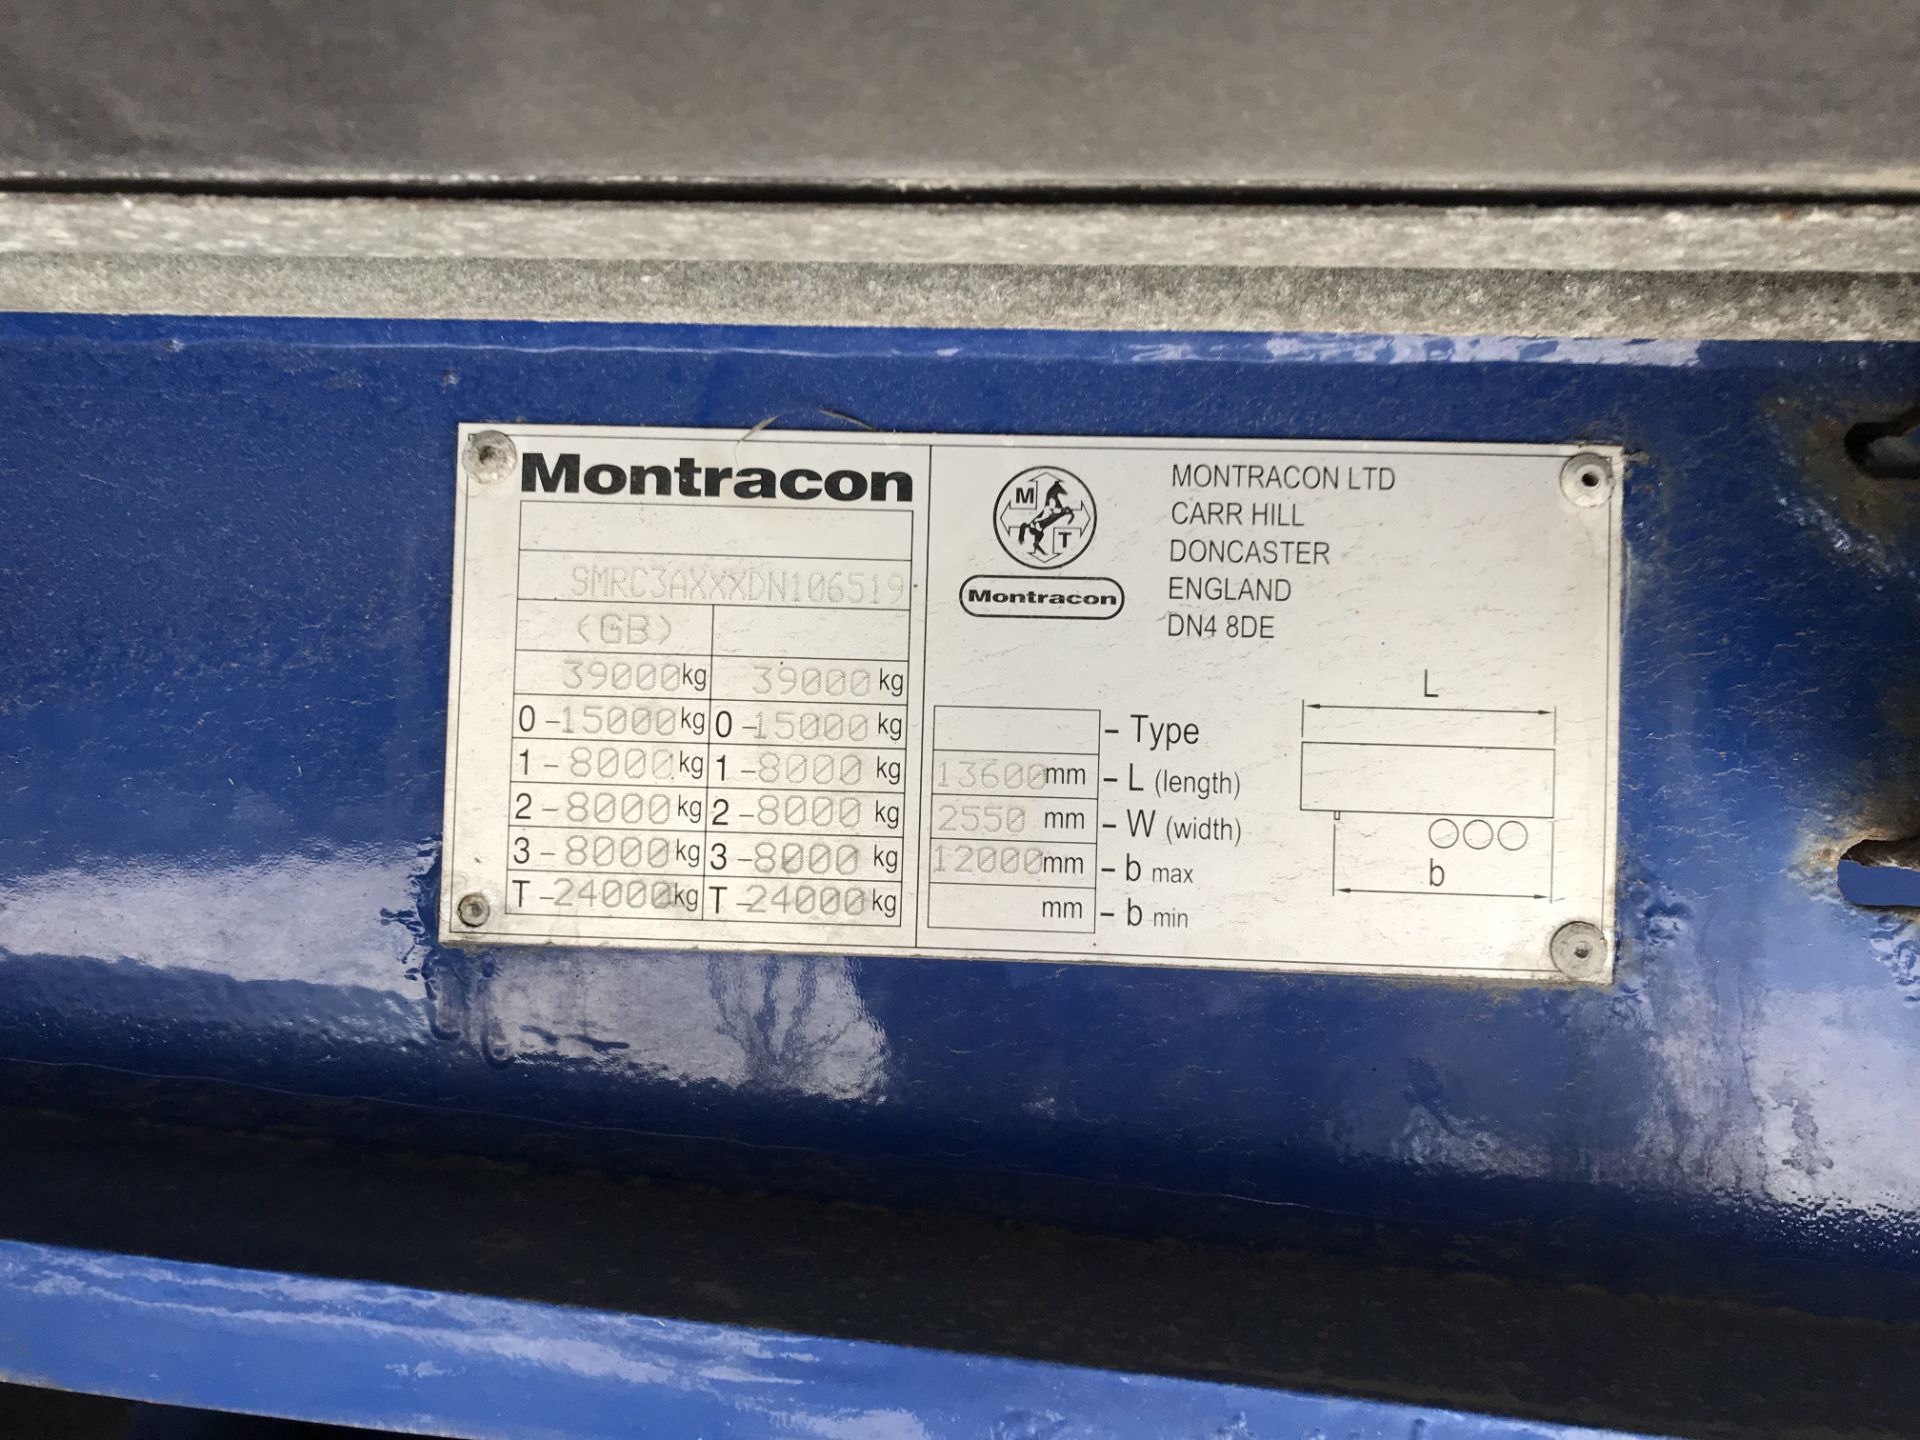 Montracon 13.6m Tri-Axle Curtainside Single Deck Semi-Trailer, chassis no. SMRC3AXXXDN106519, ID no. - Bild 6 aus 6